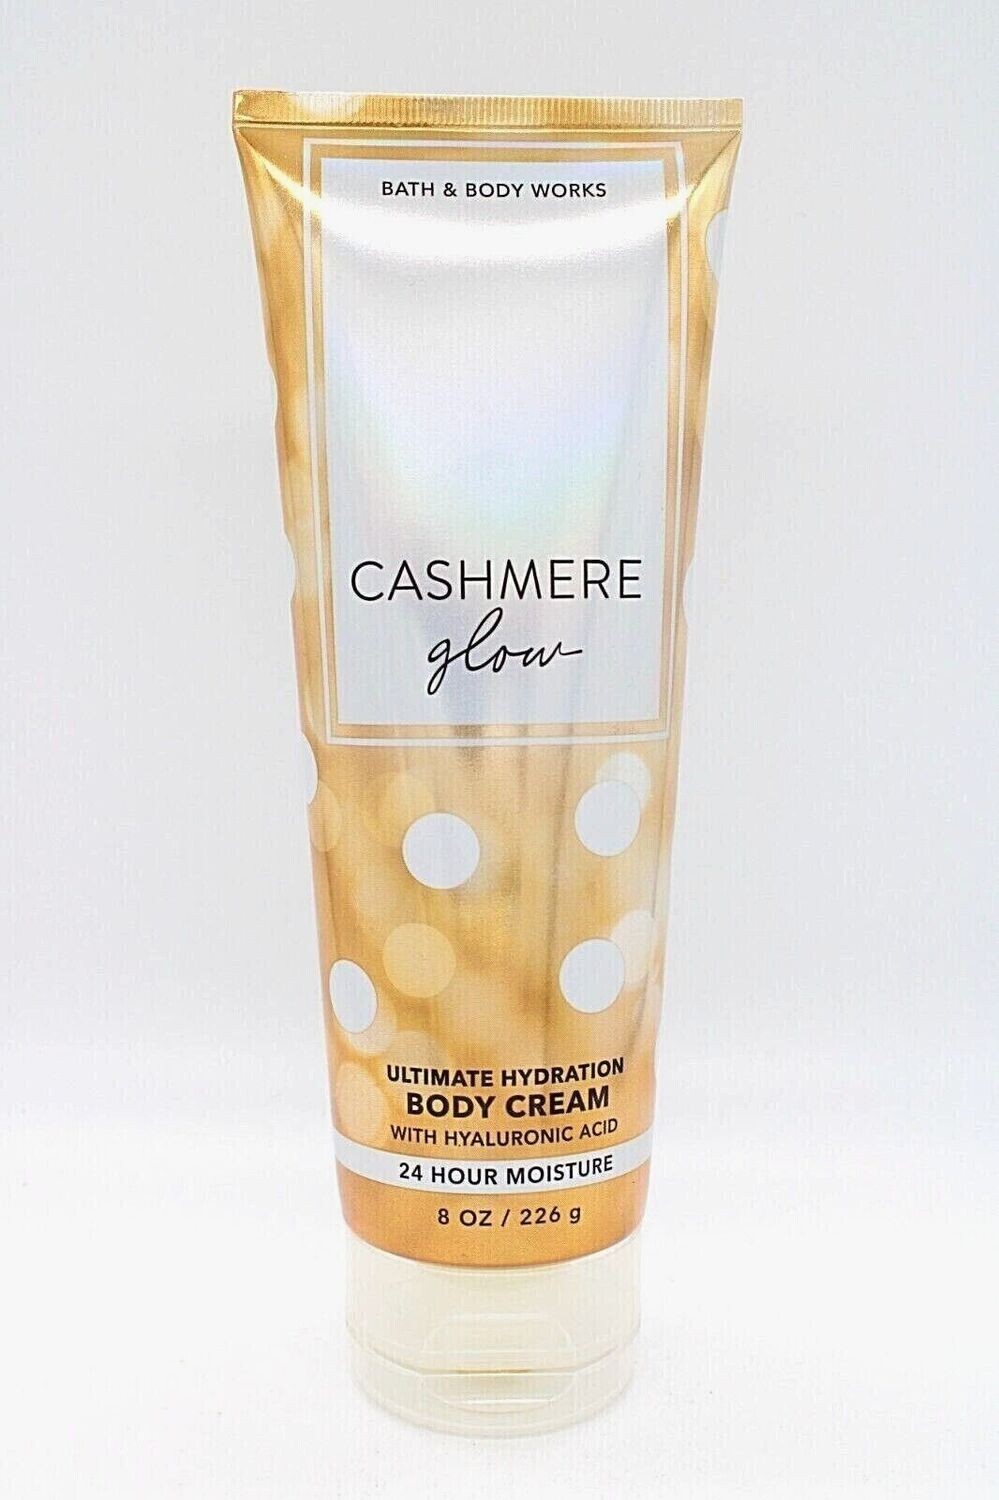 Cashmere Glow
Body Cream